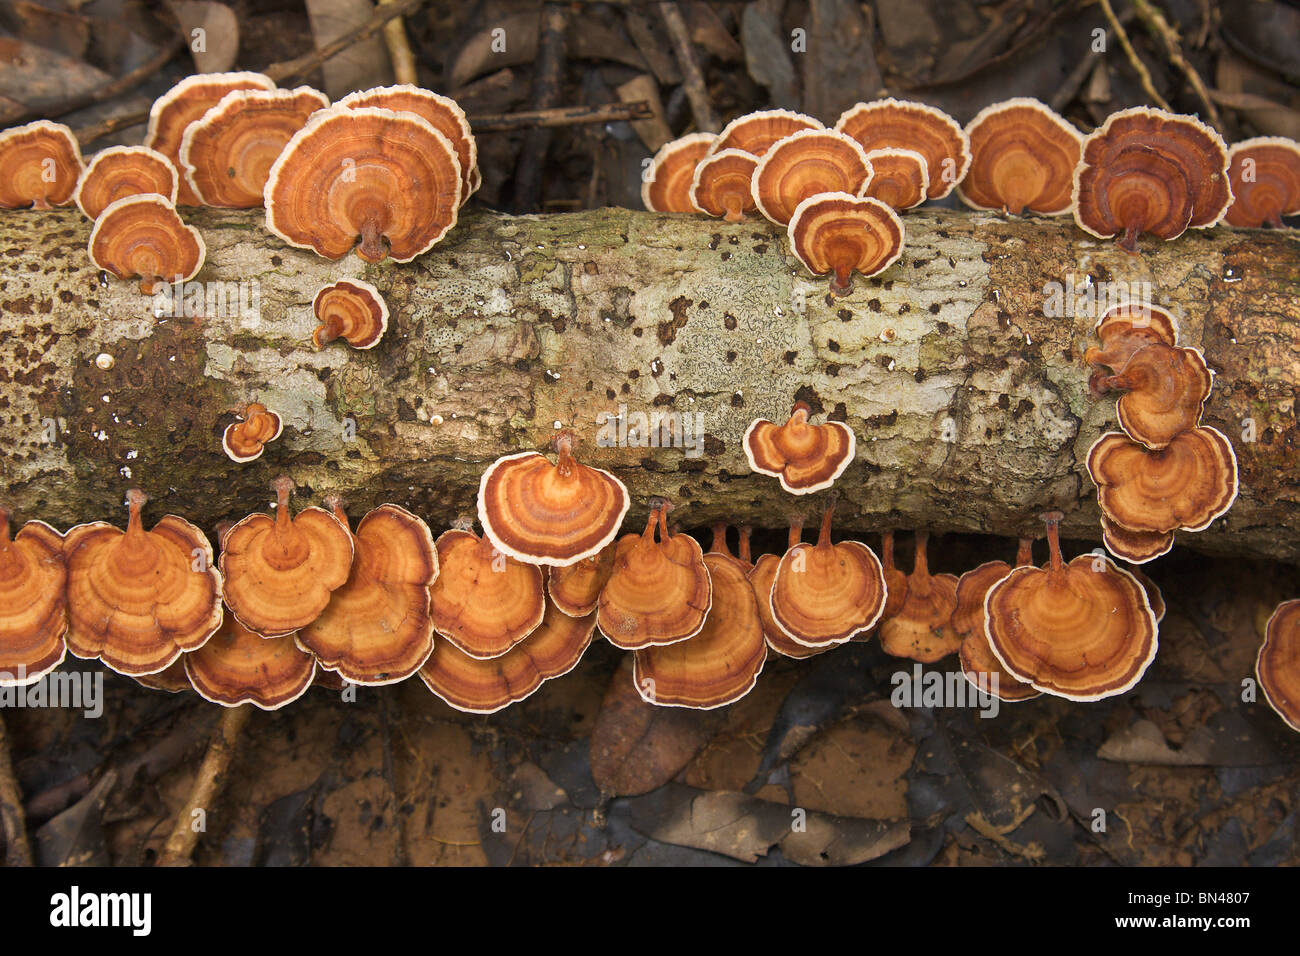 bracket fungi rainforest